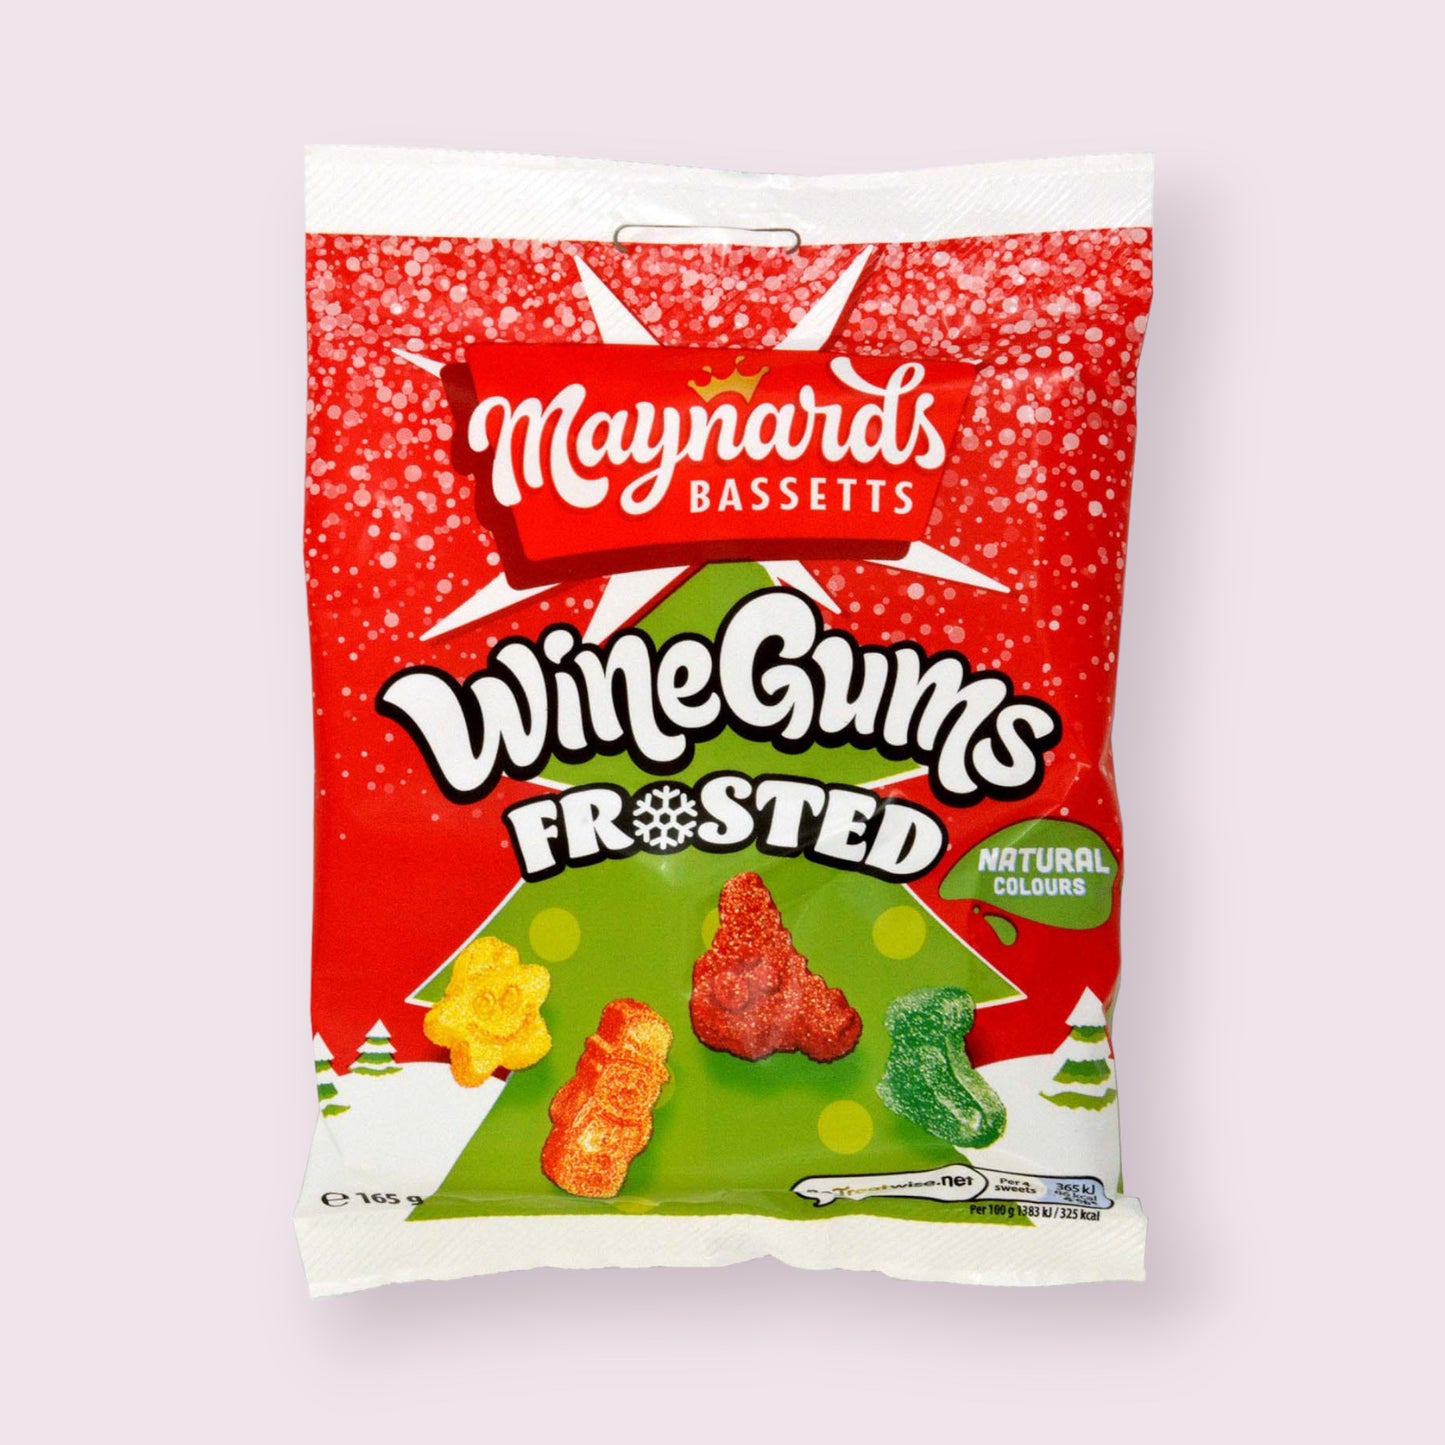 Maynards Bassetts Wine Gums Frosted Bag British Pixie Candy Shoppe   